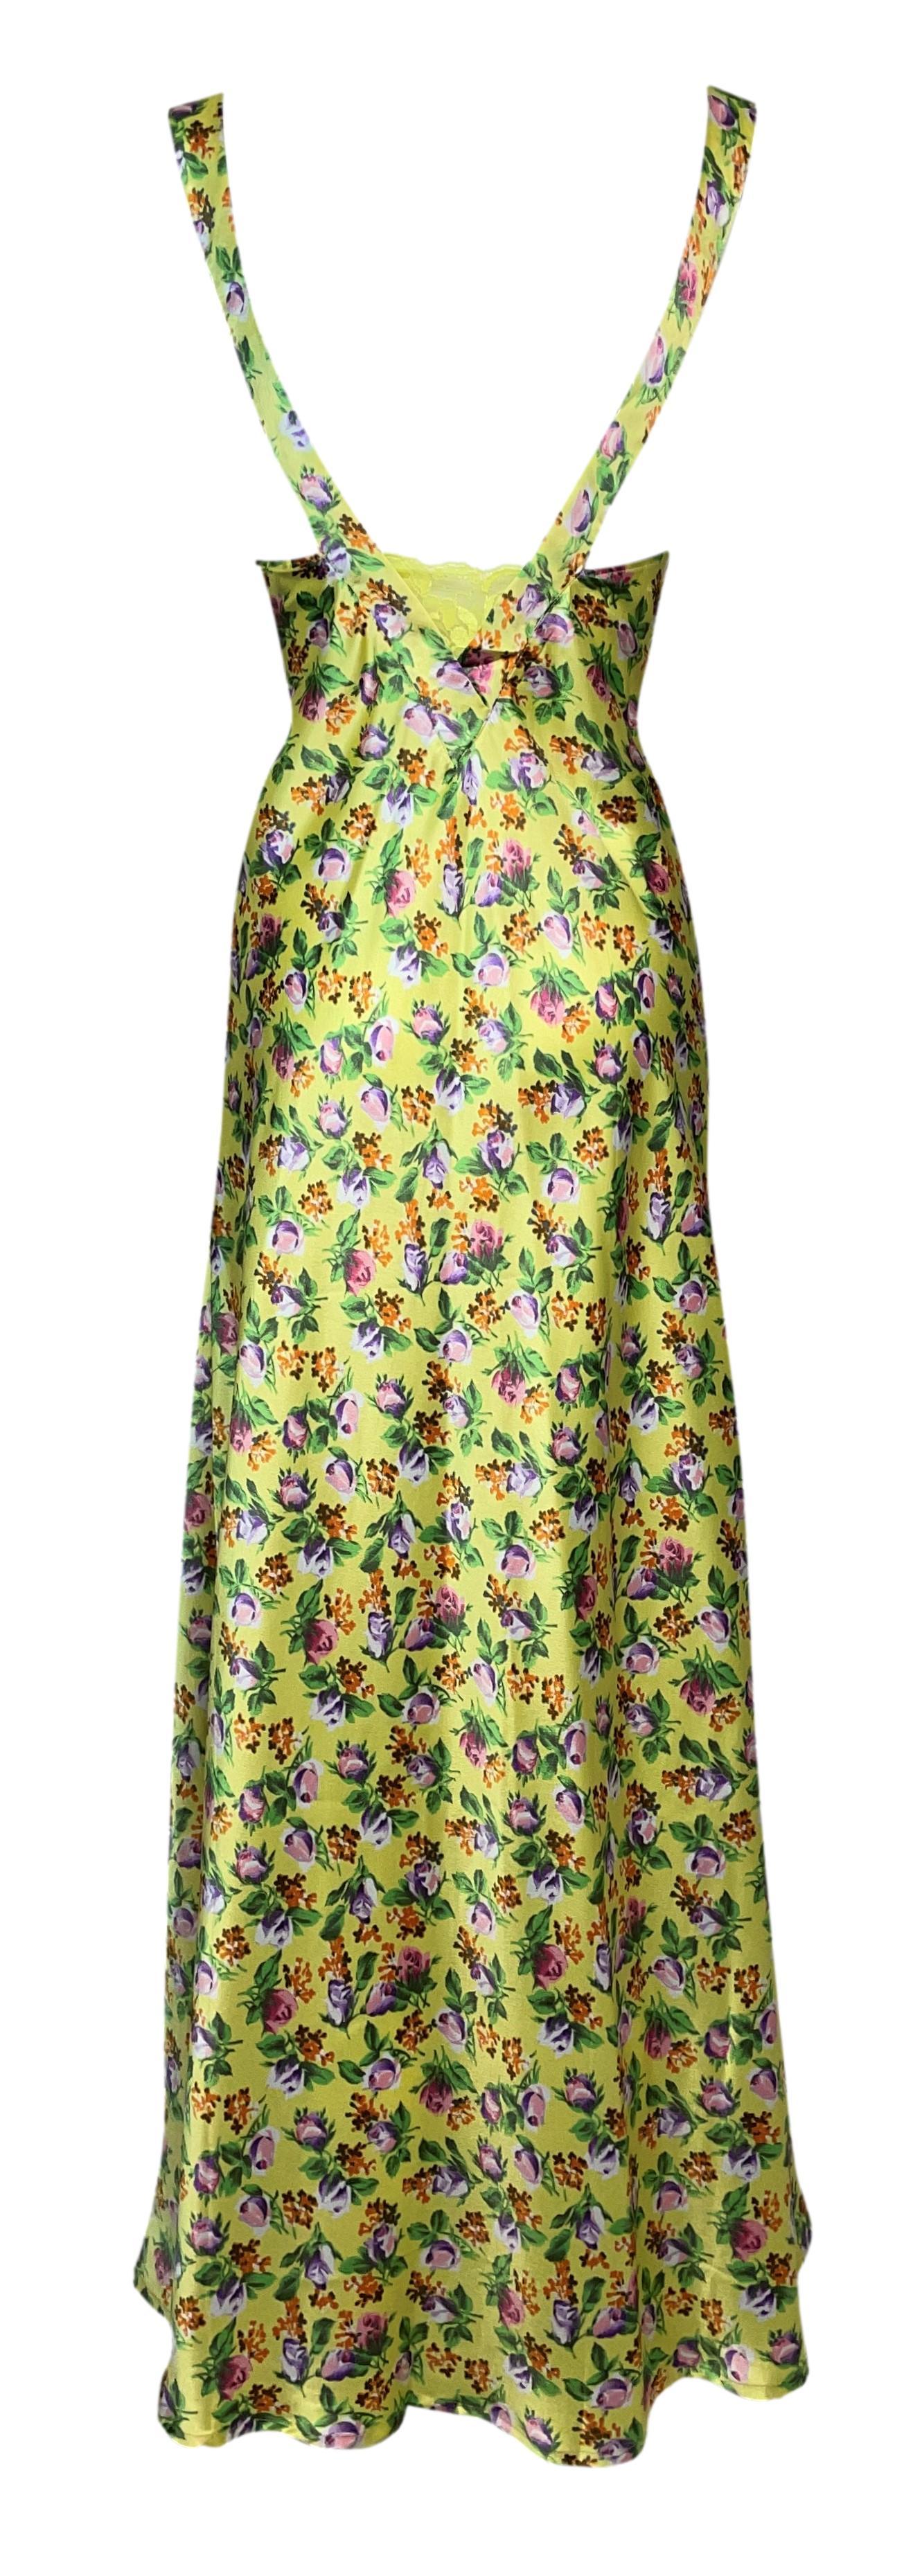 versace floral dress